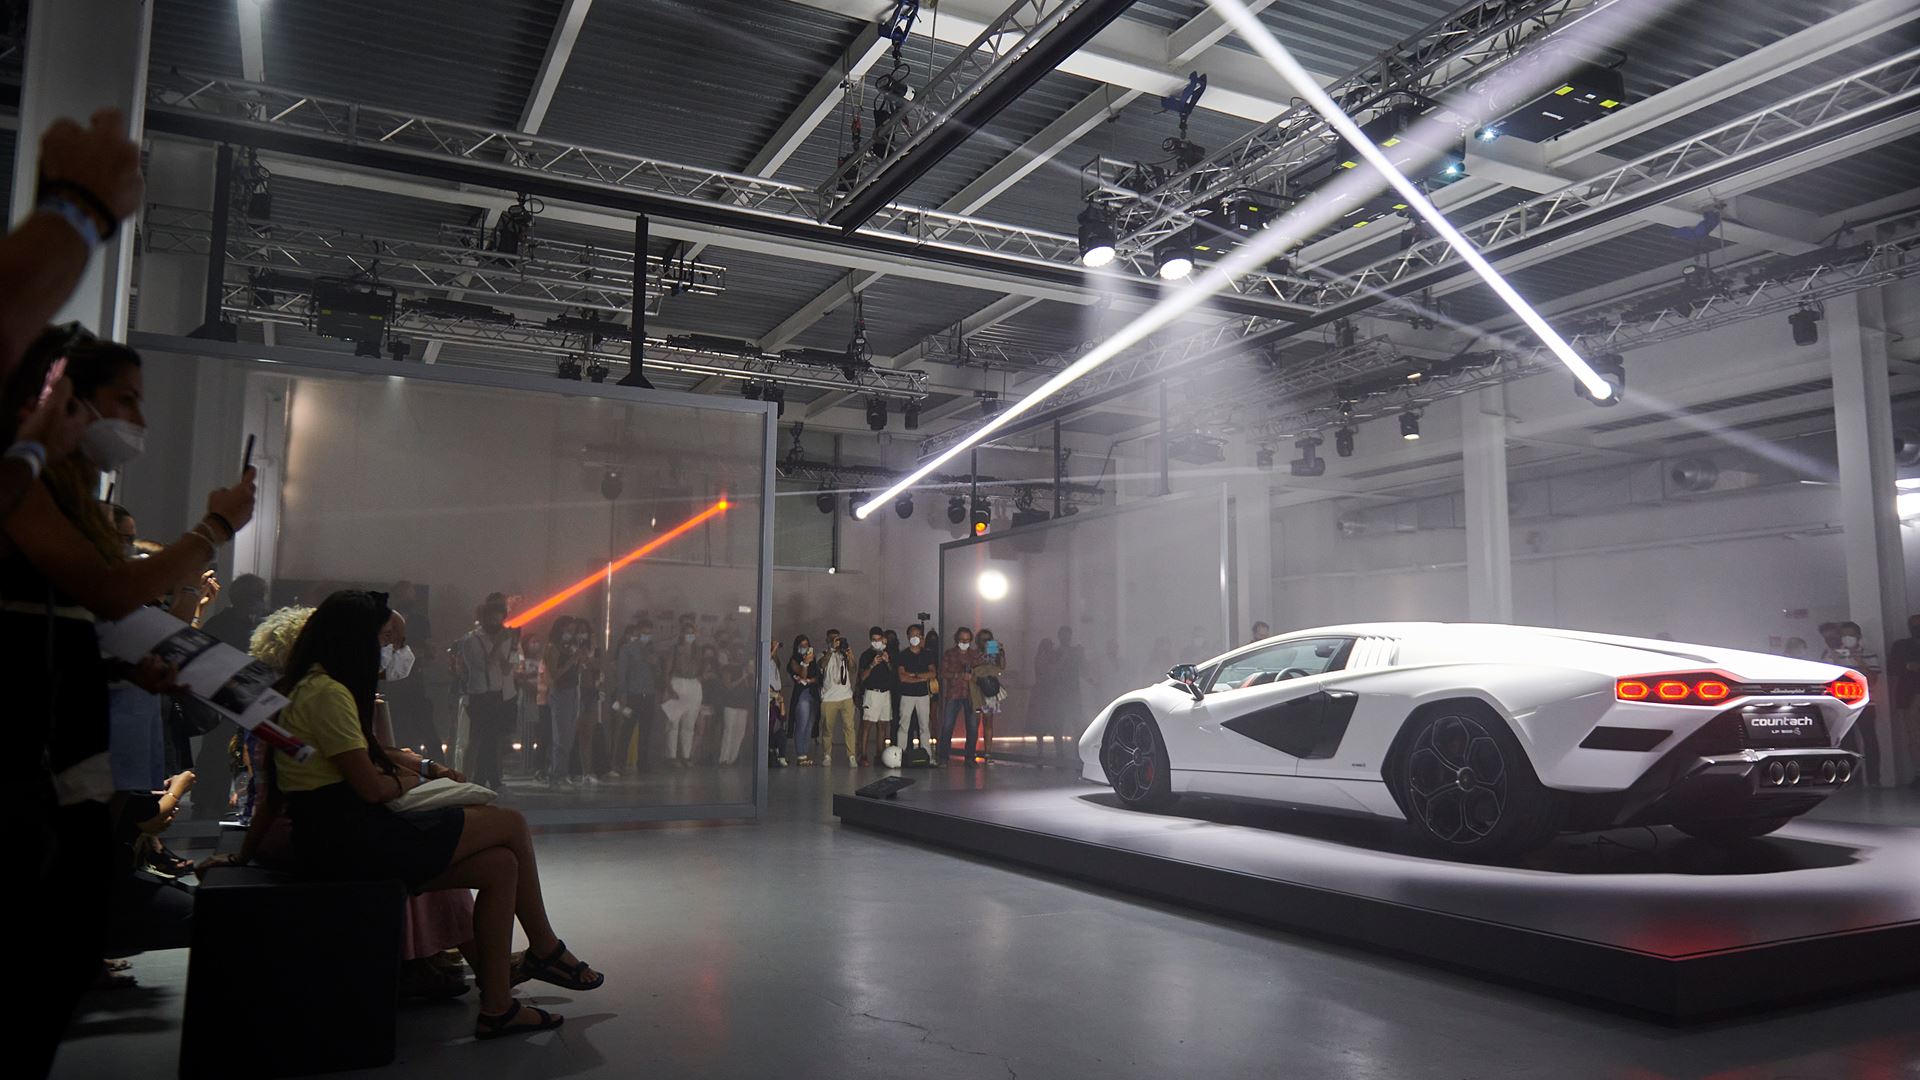 Lamborghini presents the Countach LPI 800-4 at Milan Design Week, celebrating its uniquely inspirational design - Image 8